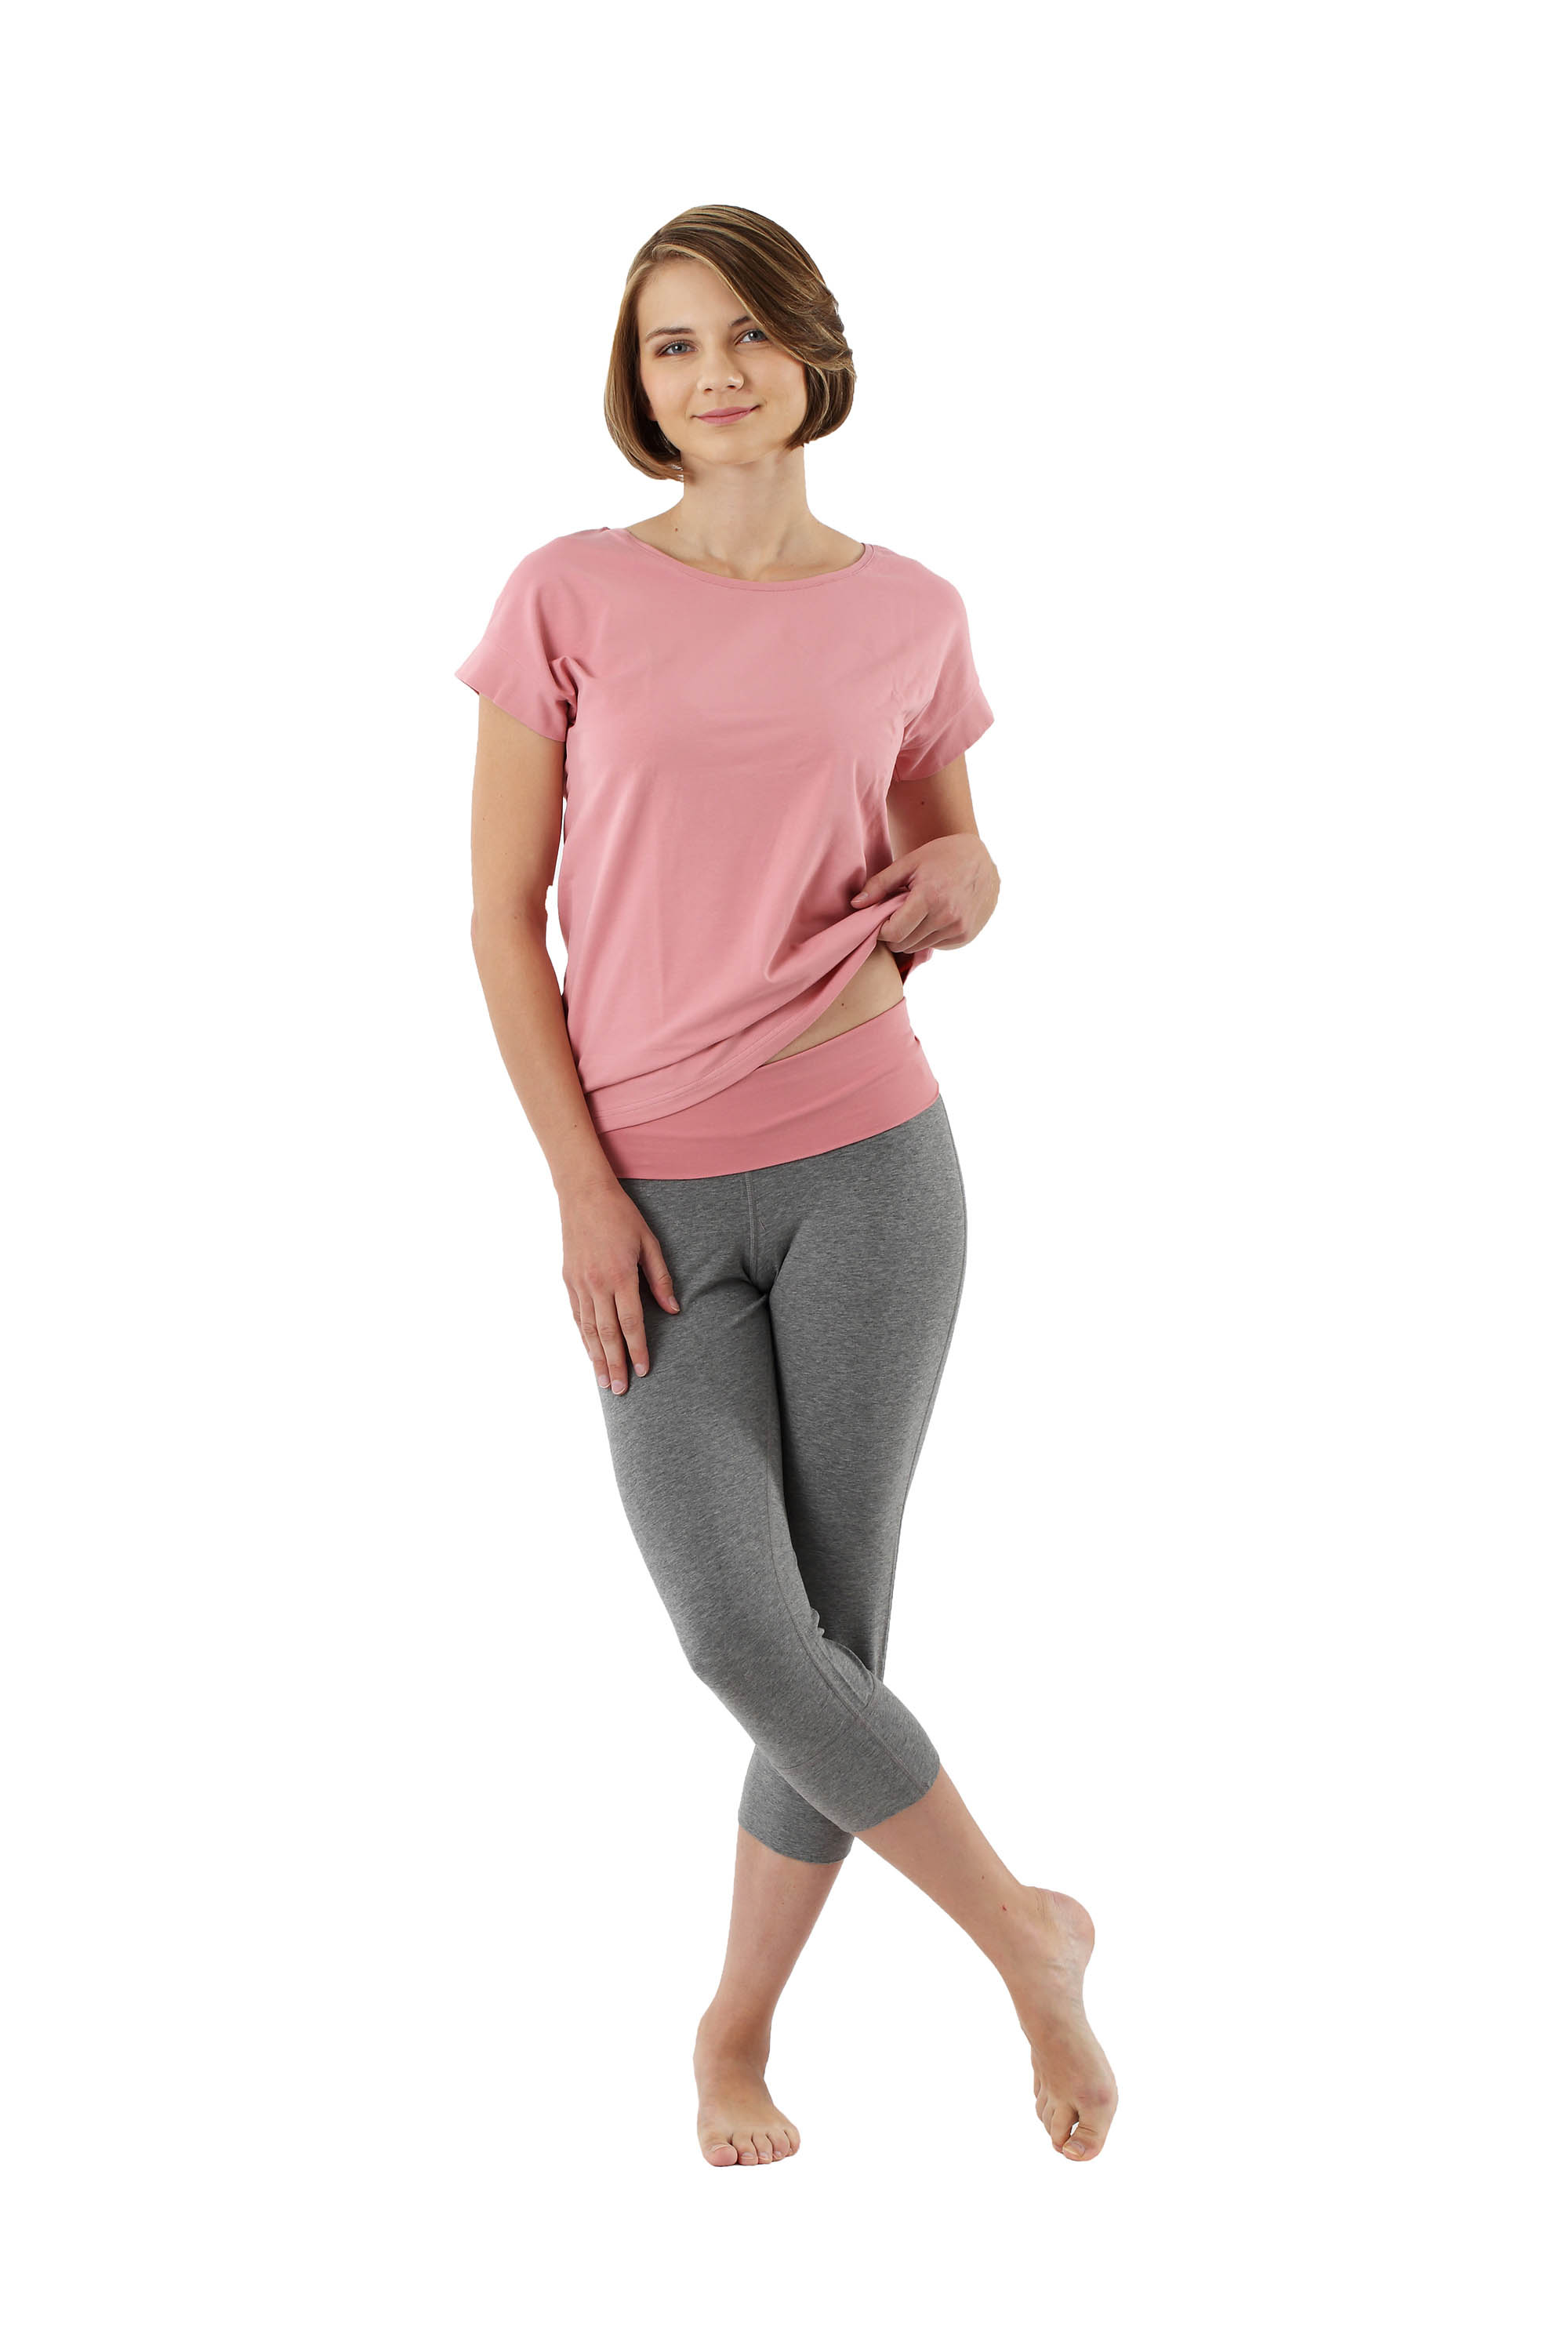 Threadbare Petite legging shorts and oversized T-shirt set in gray heather  | ASOS